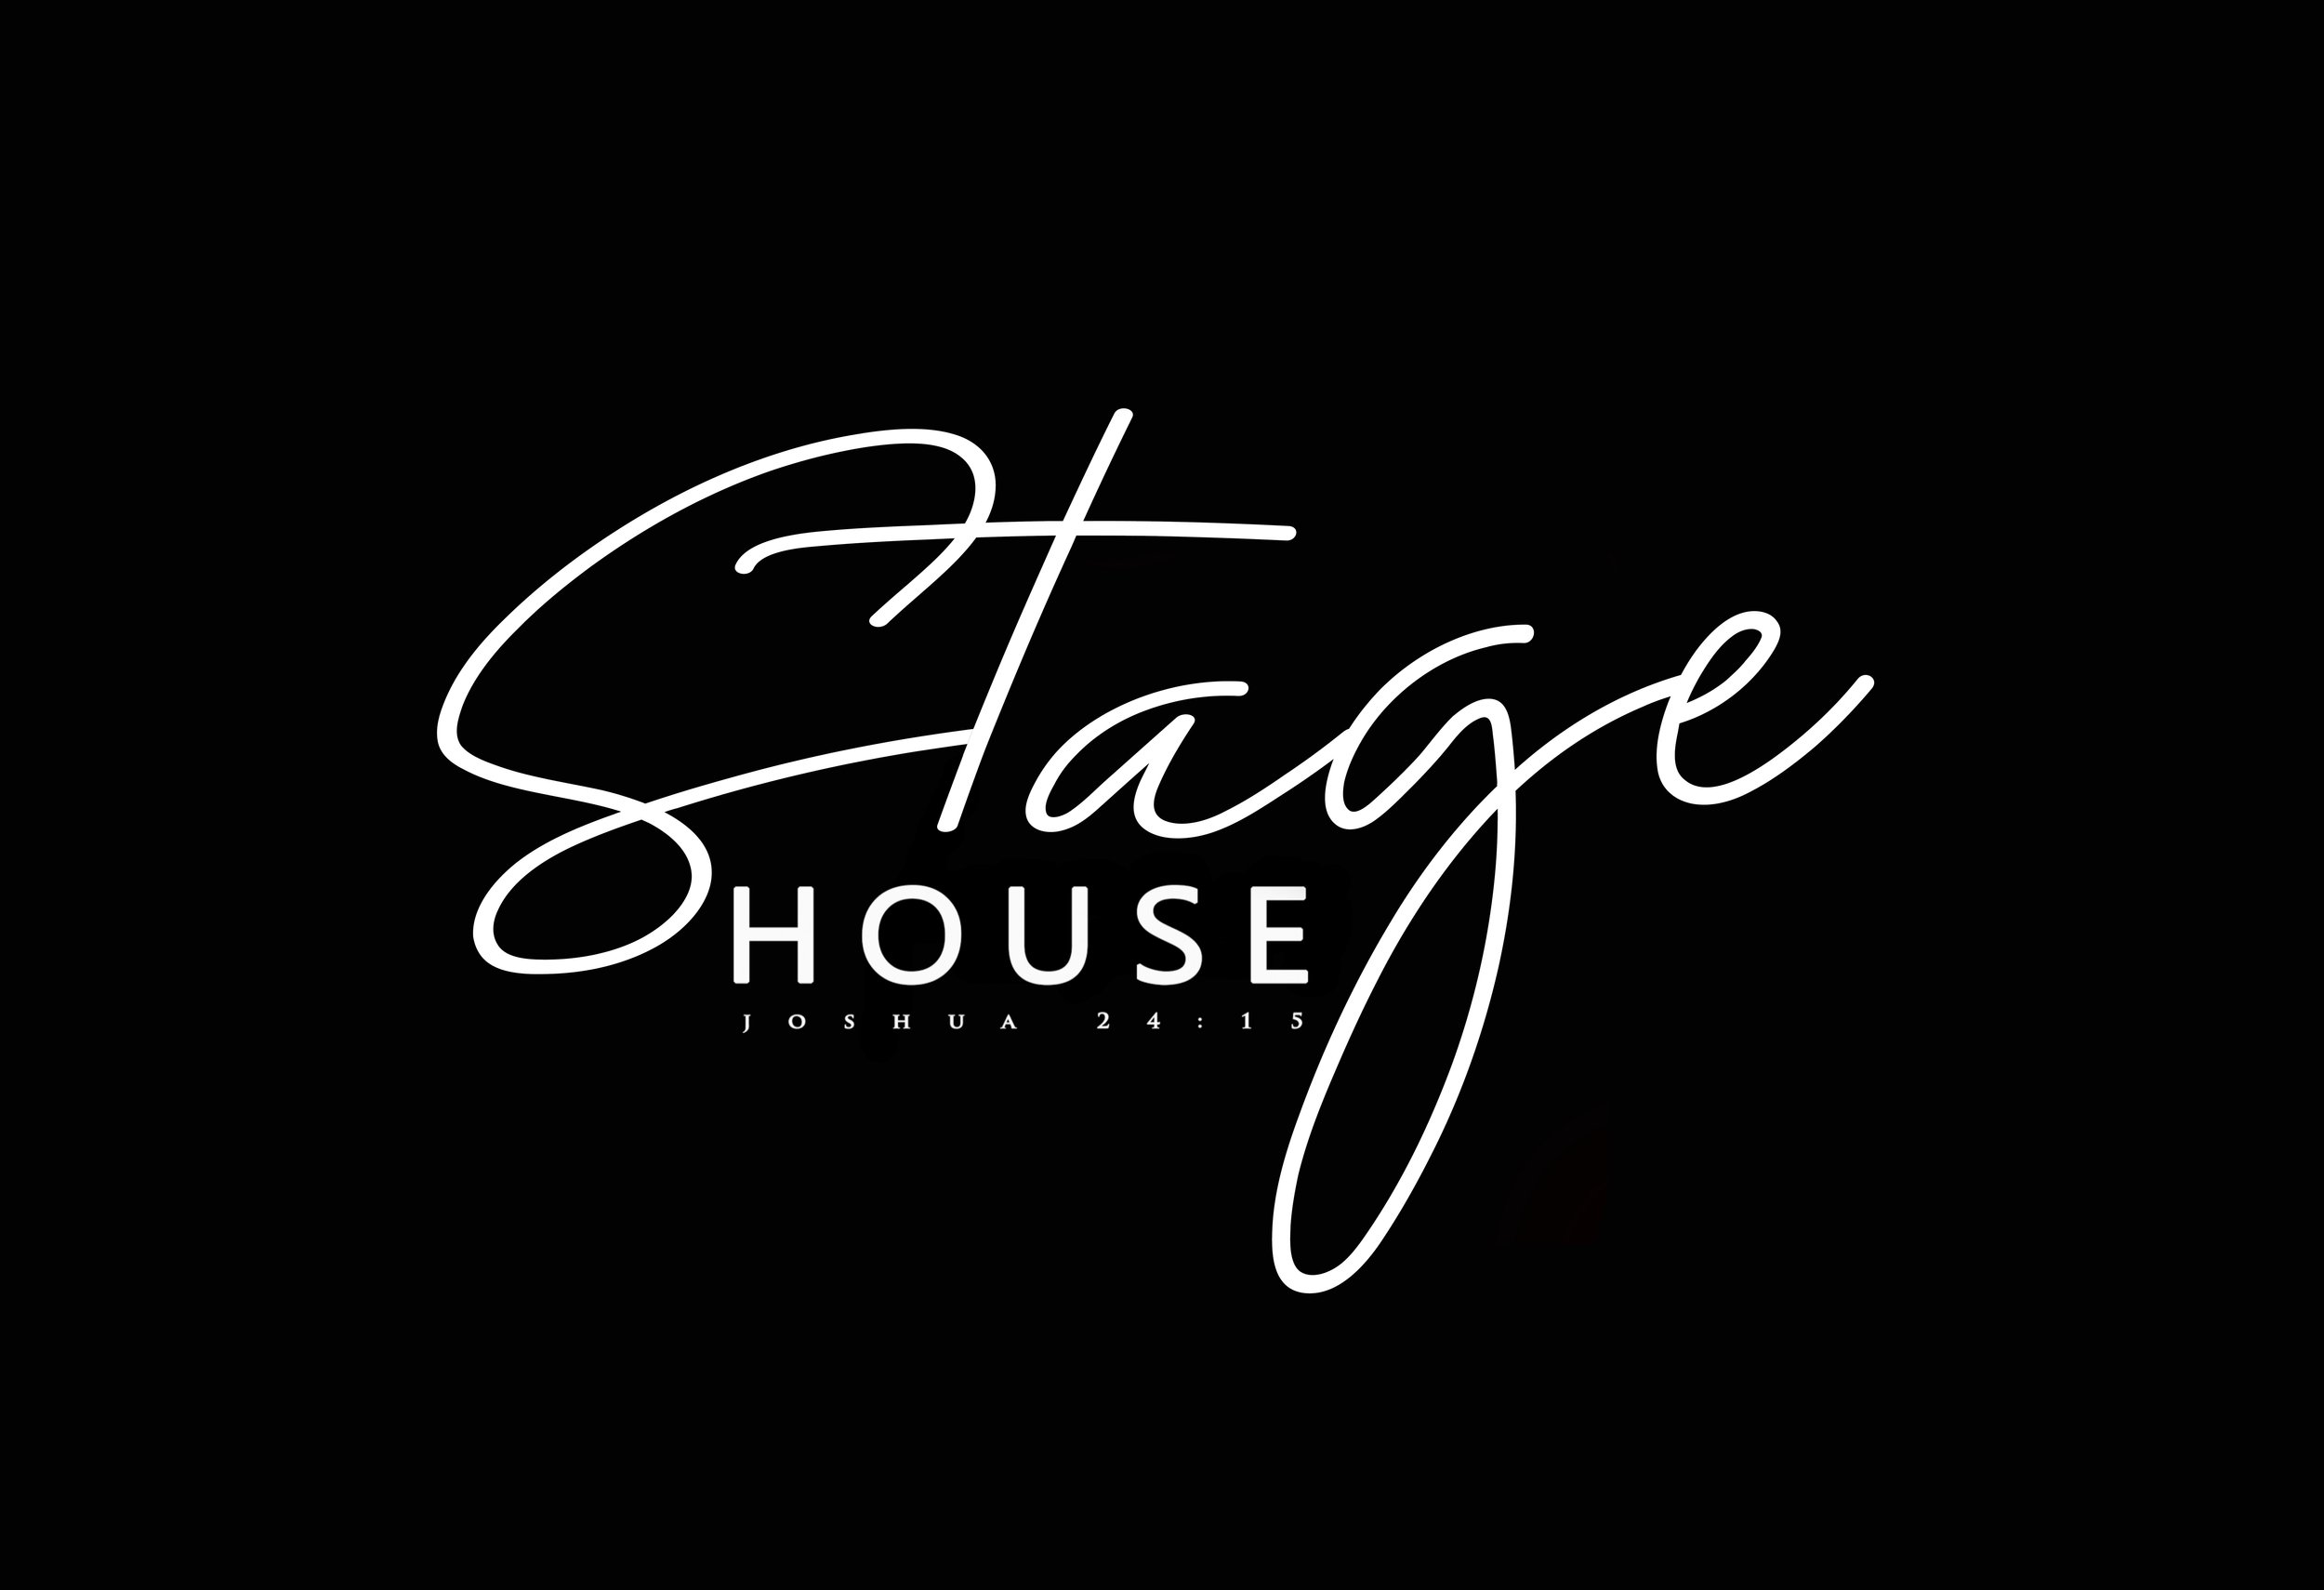 WEB-Stage-House-Logo-Black-Background-.jpg